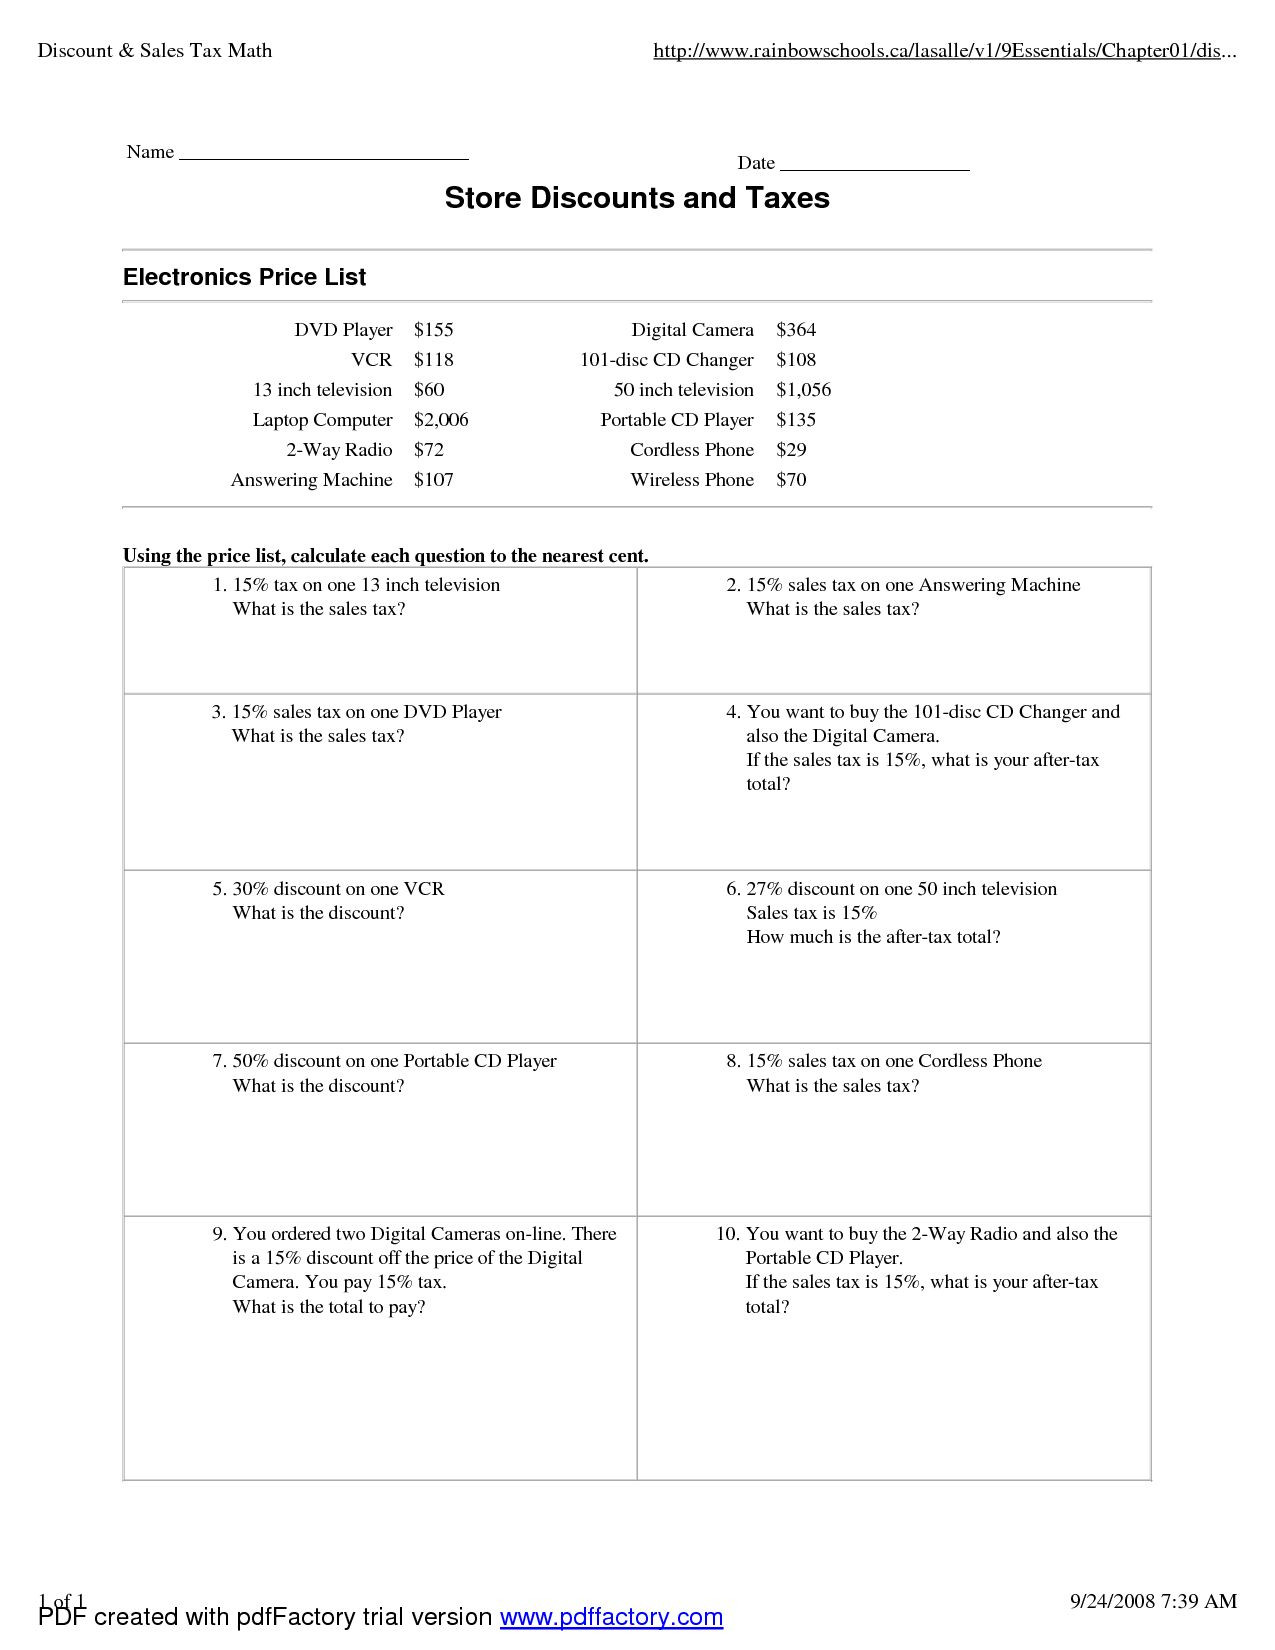 Verifying Trig Identities Worksheet Trigonometric Identities Practice Worksheet